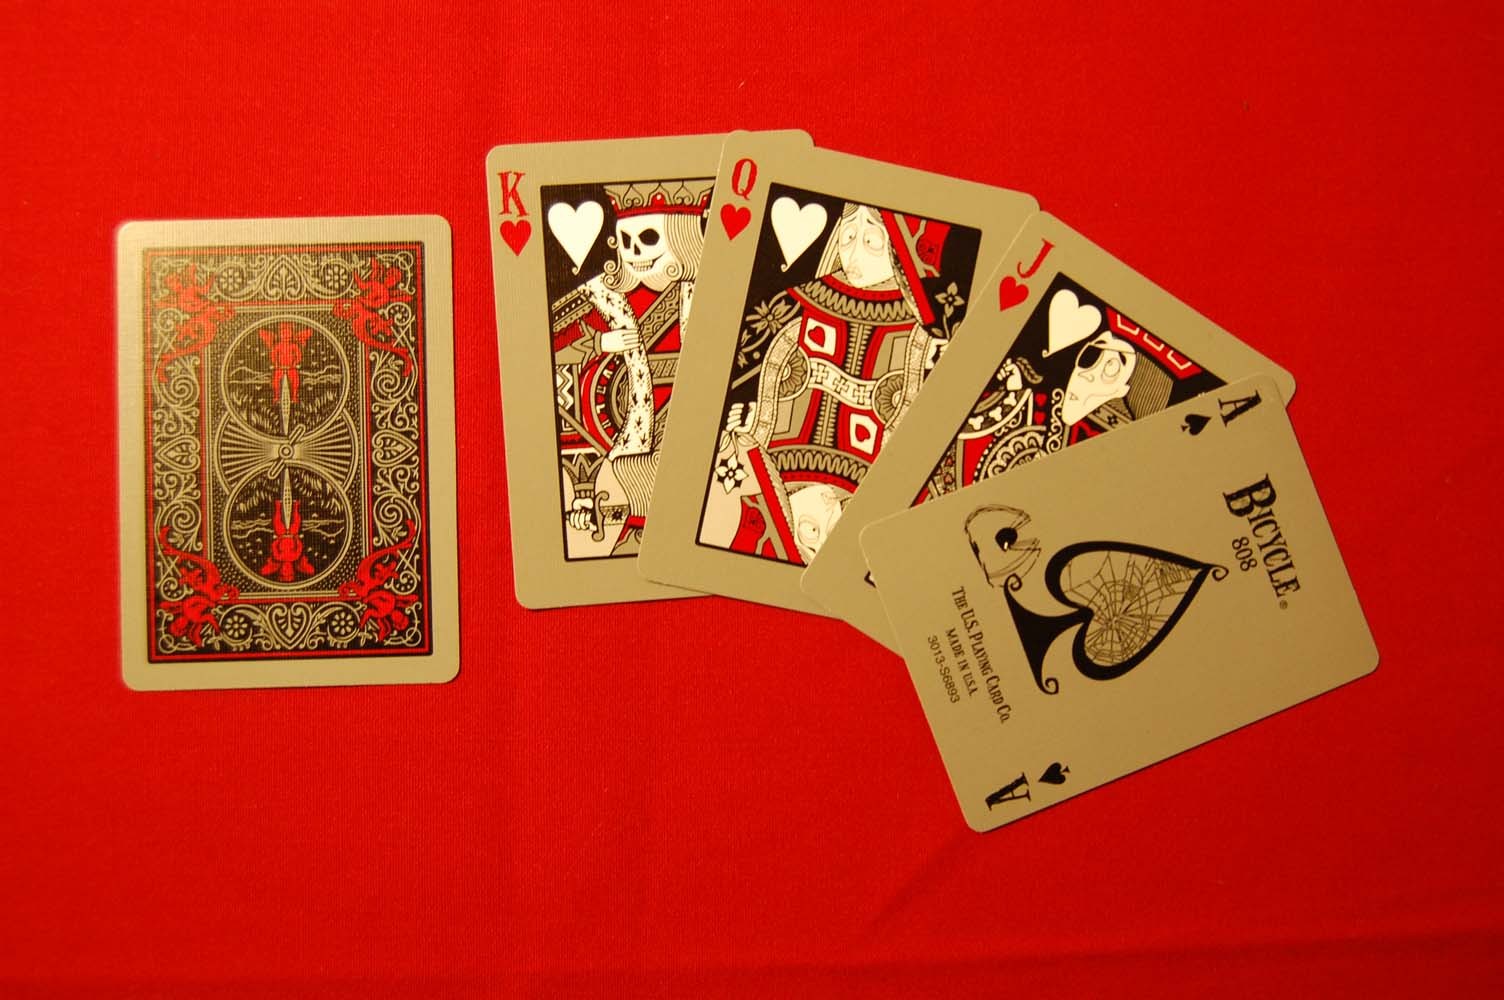 Bicycle tragic Royalty playing Cards